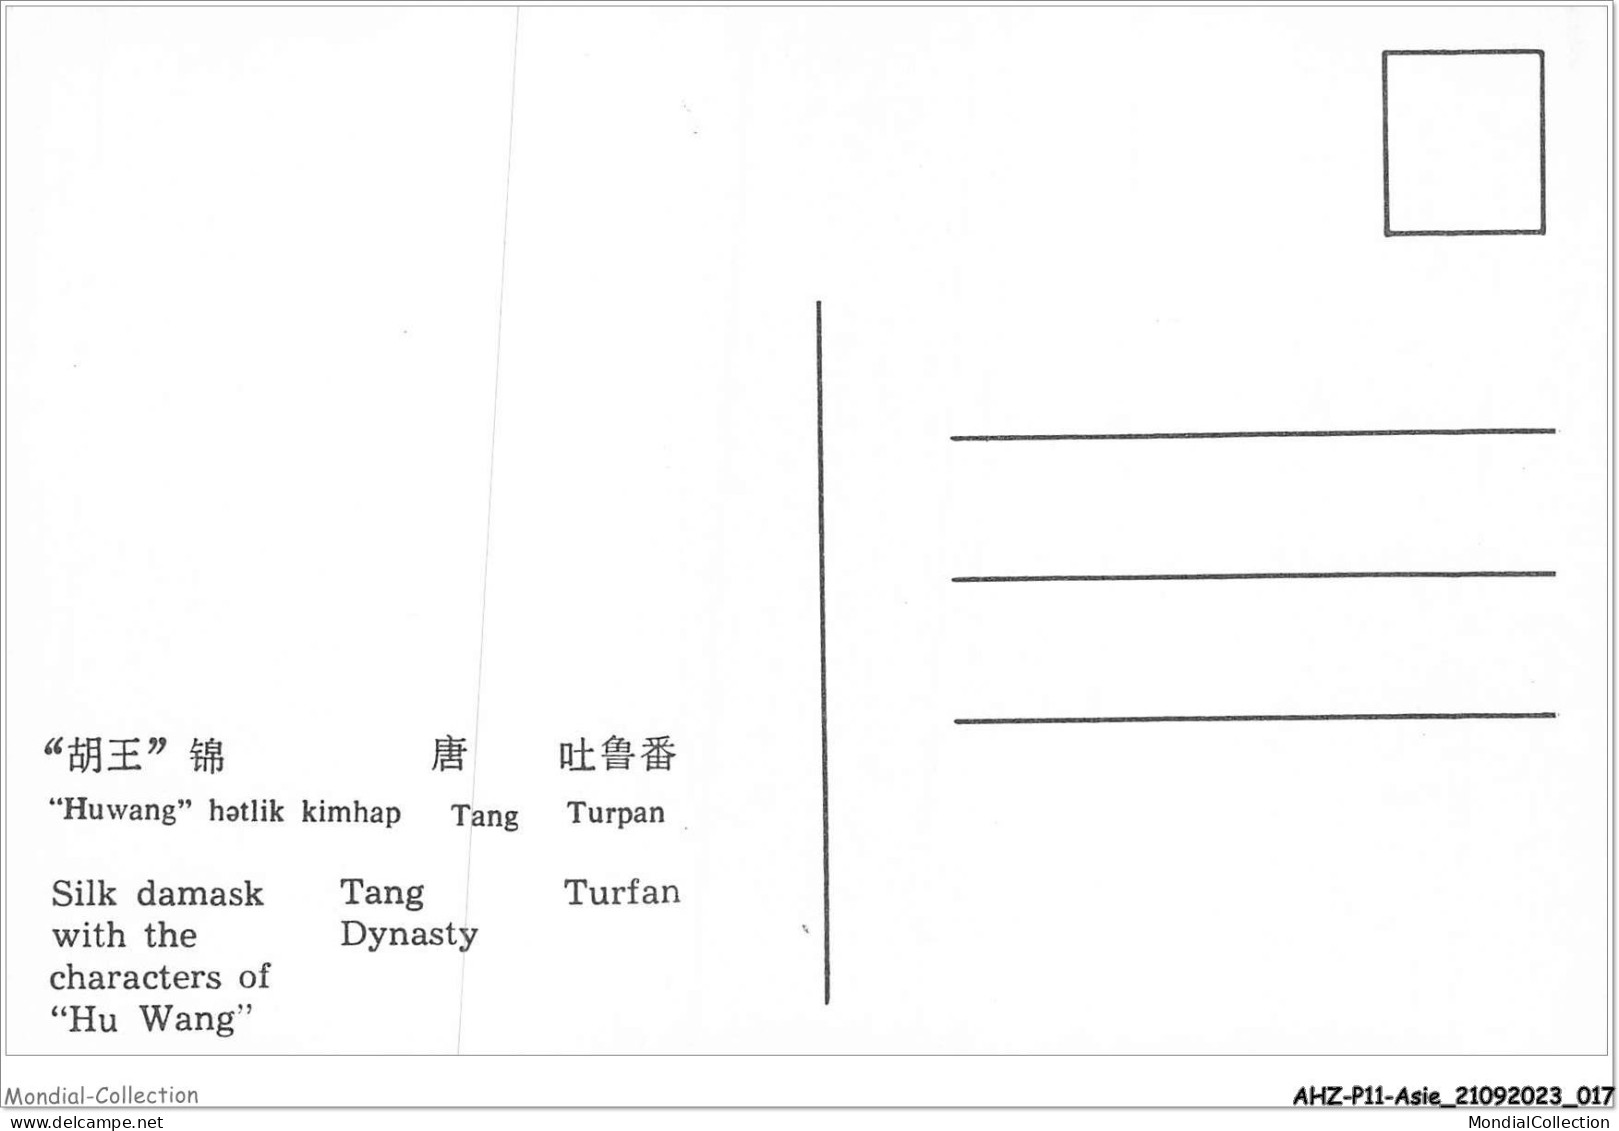 AHZP11-CHINE-0989 - SILK DAMASK WITH THE CHARACTERS OF HU WANG - TANG DYNASTY - TURFAN - China